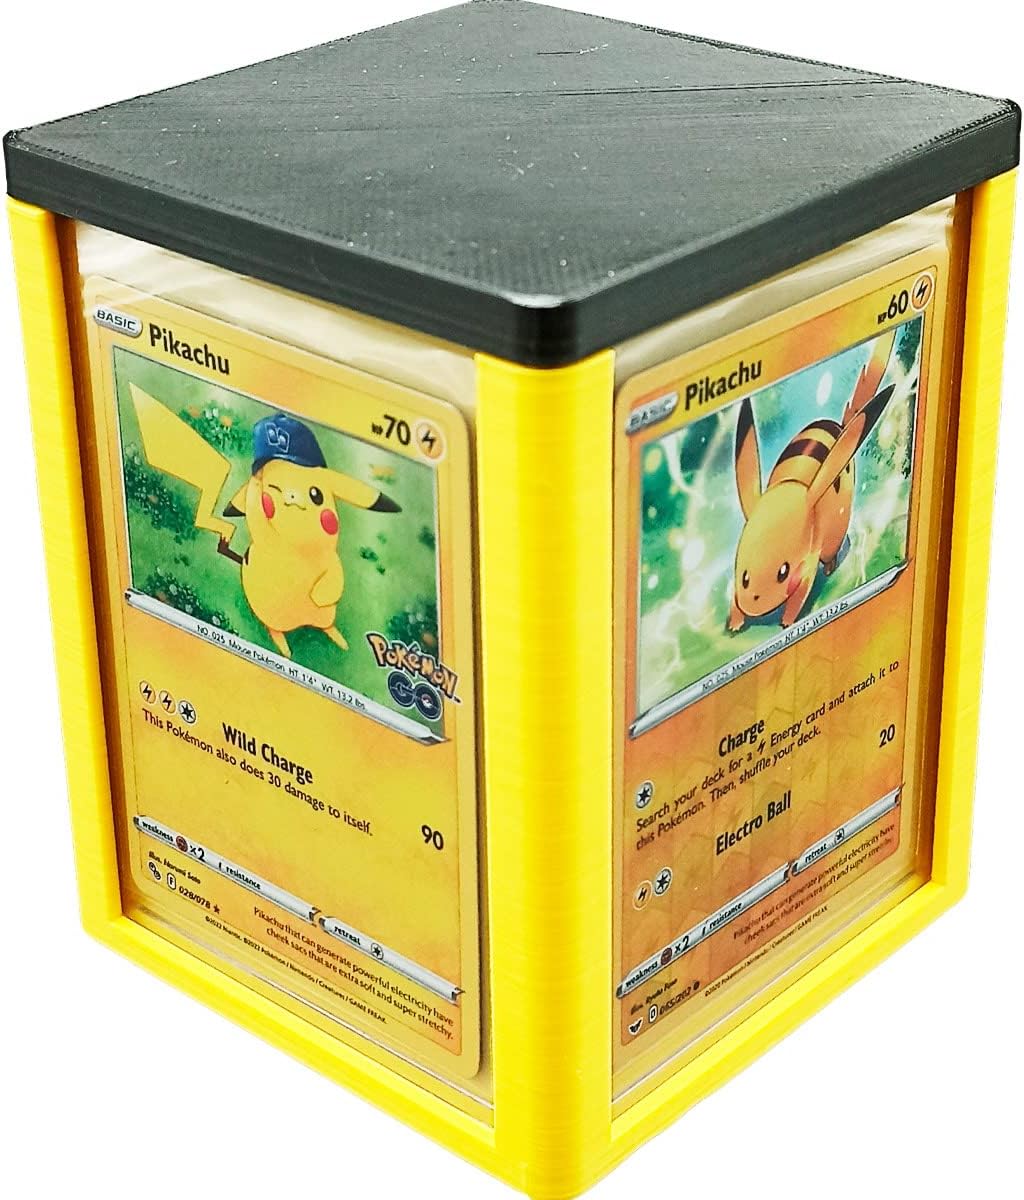 BCW Trading Card Sorting Tray for Pokemon, MTG, Belgium